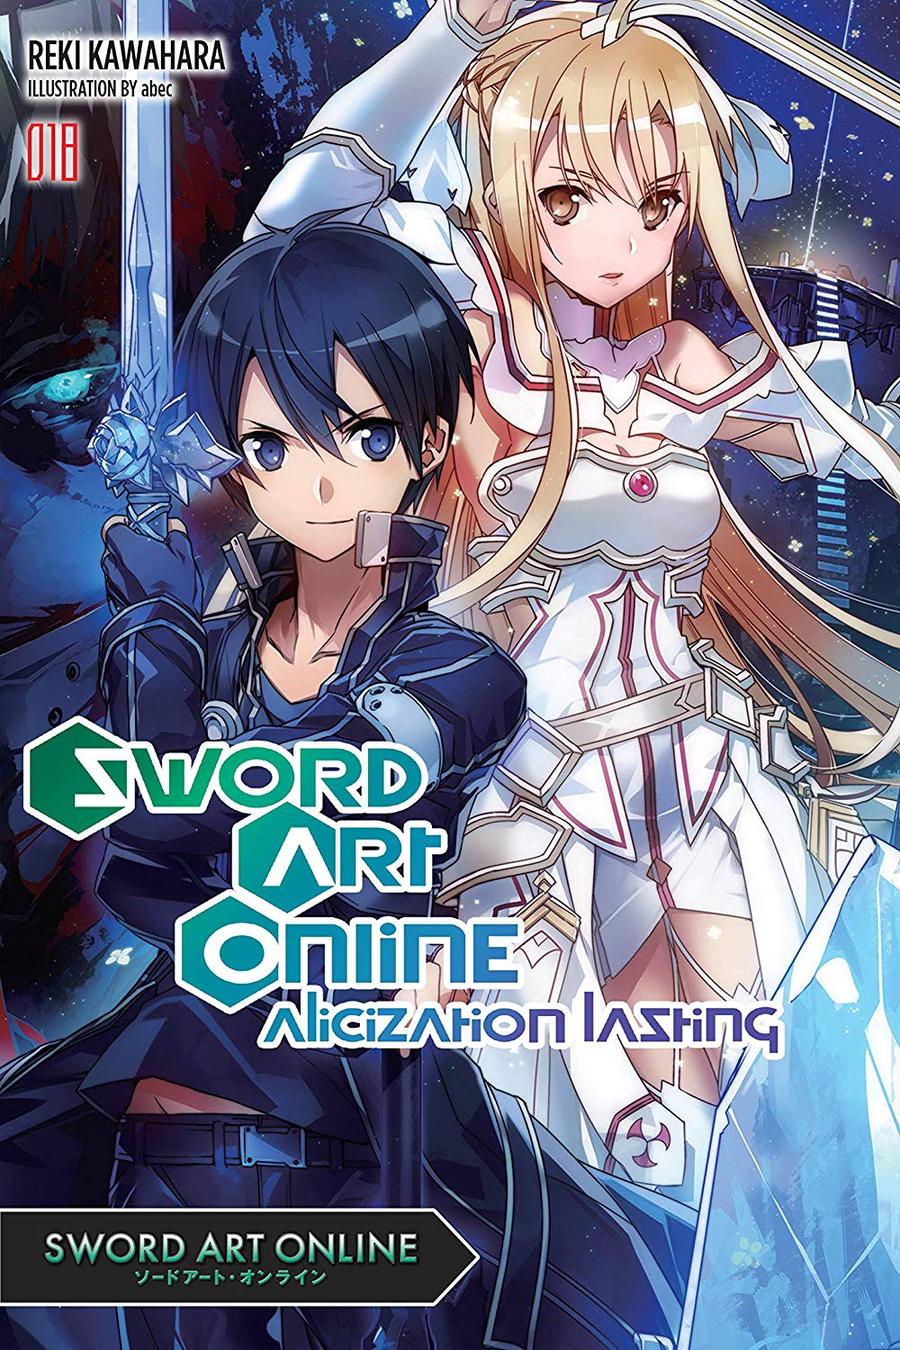 Sword Art Online Novel Vol 18 Alicization Lasting